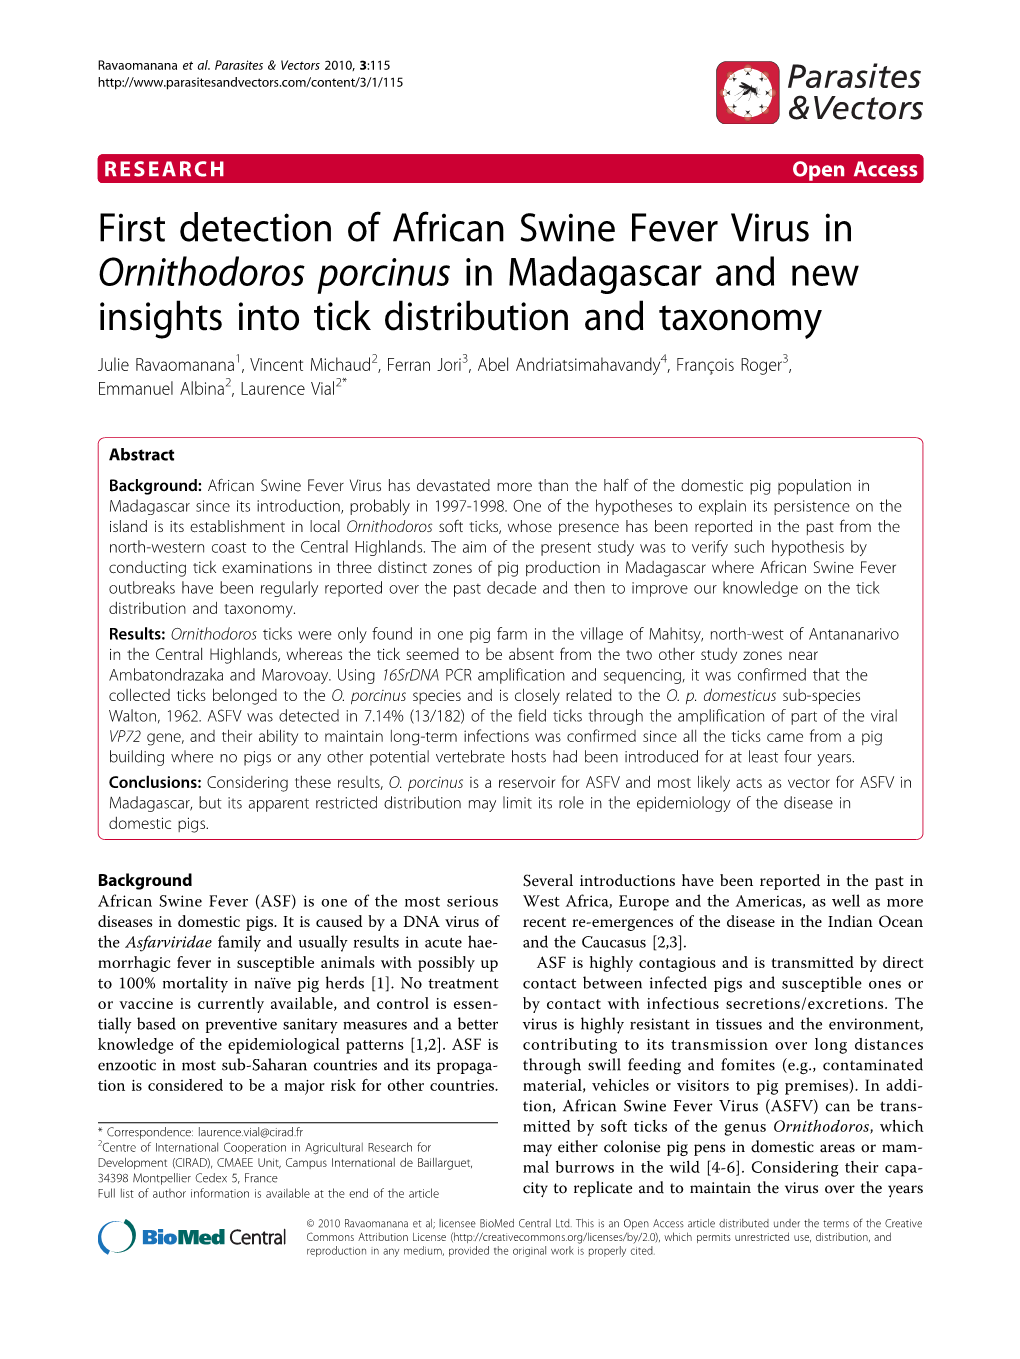 First Detection of African Swine Fever Virus in Ornithodoros Porcinus In